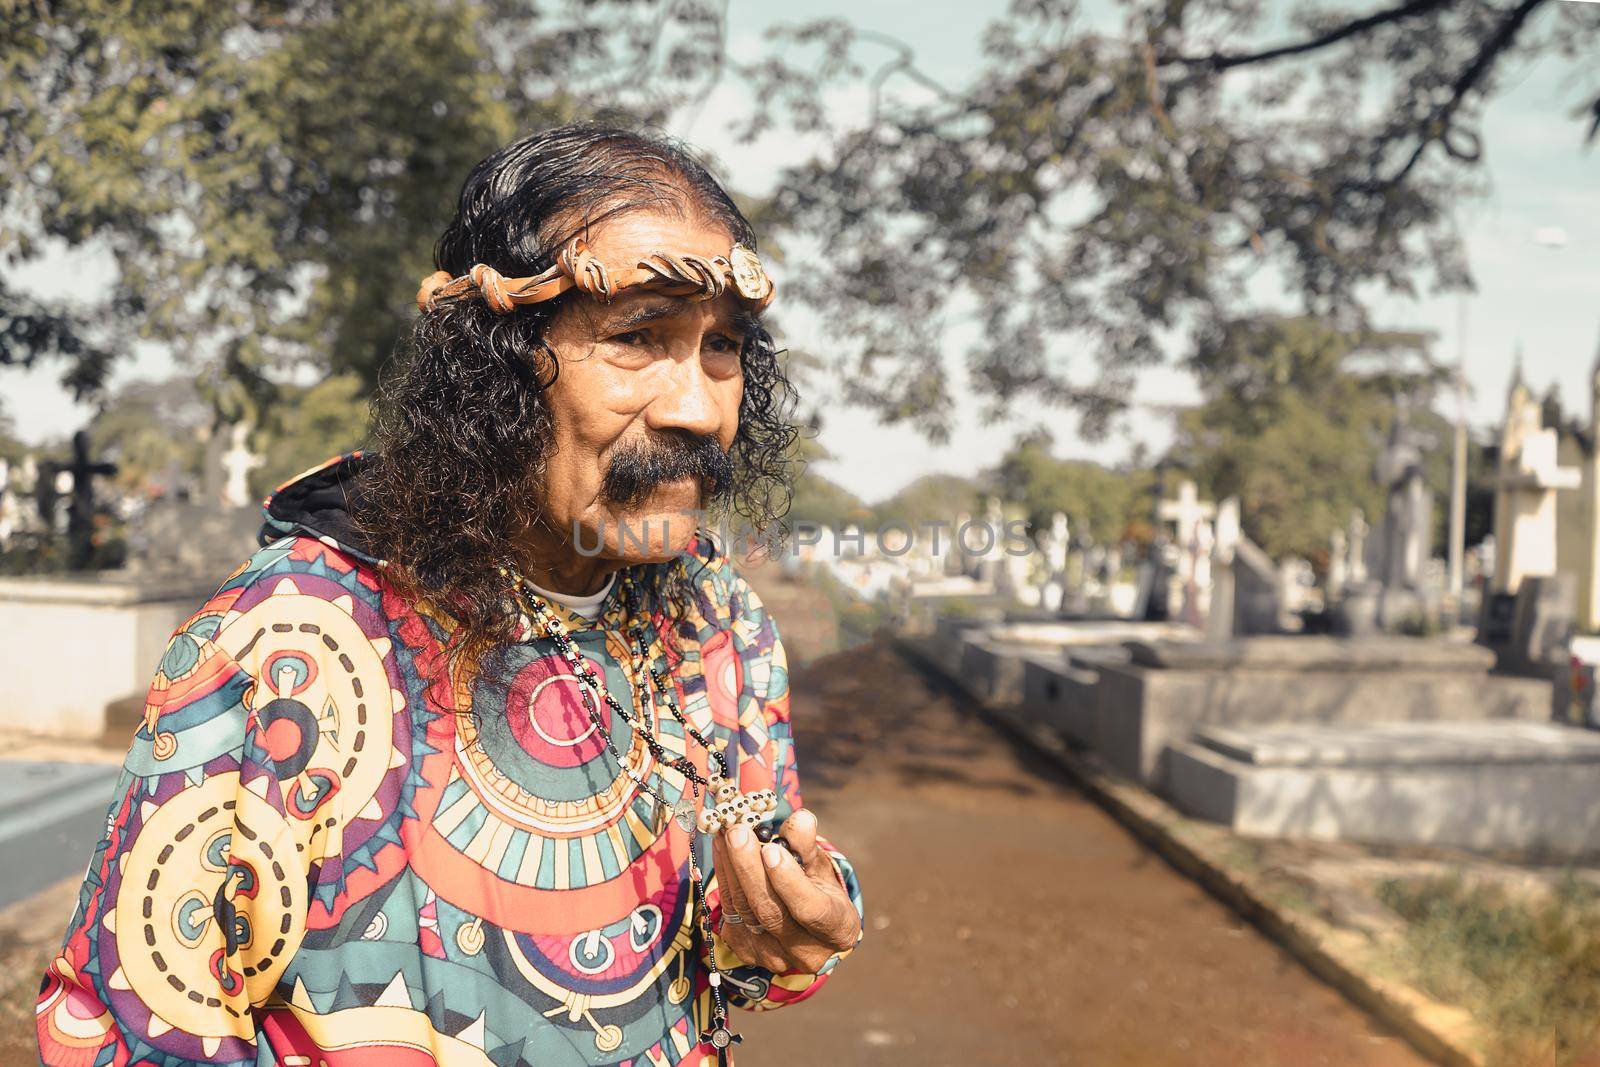 Devotee of Santa Muerte playing her skull and crossbones crucifix in a cemetery in Managua Nicaragua